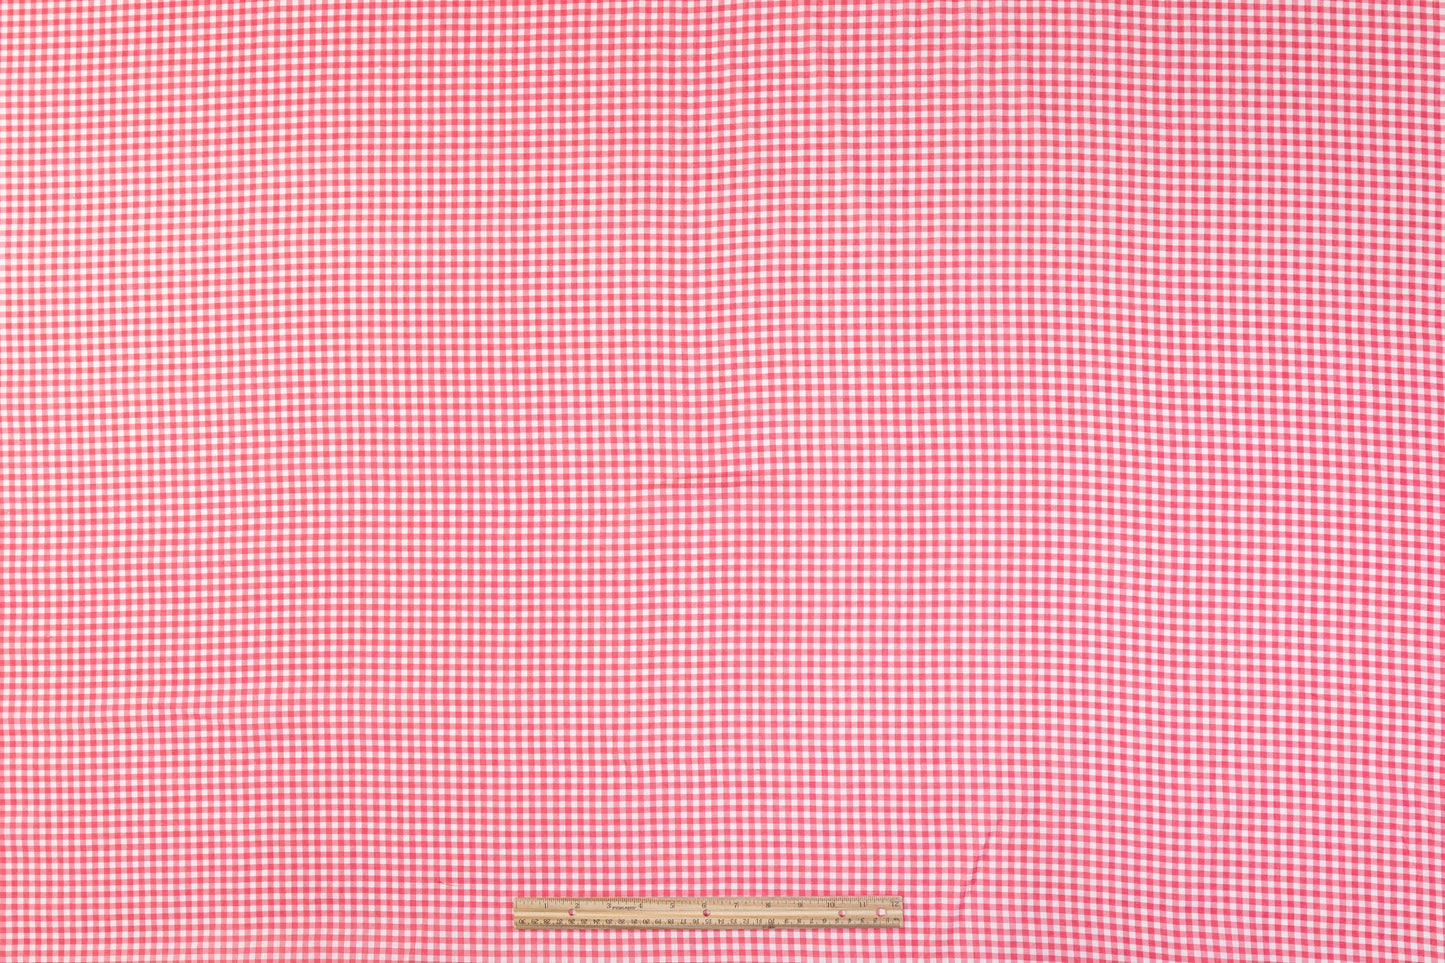 Gingham Check Italian Linen - Pink